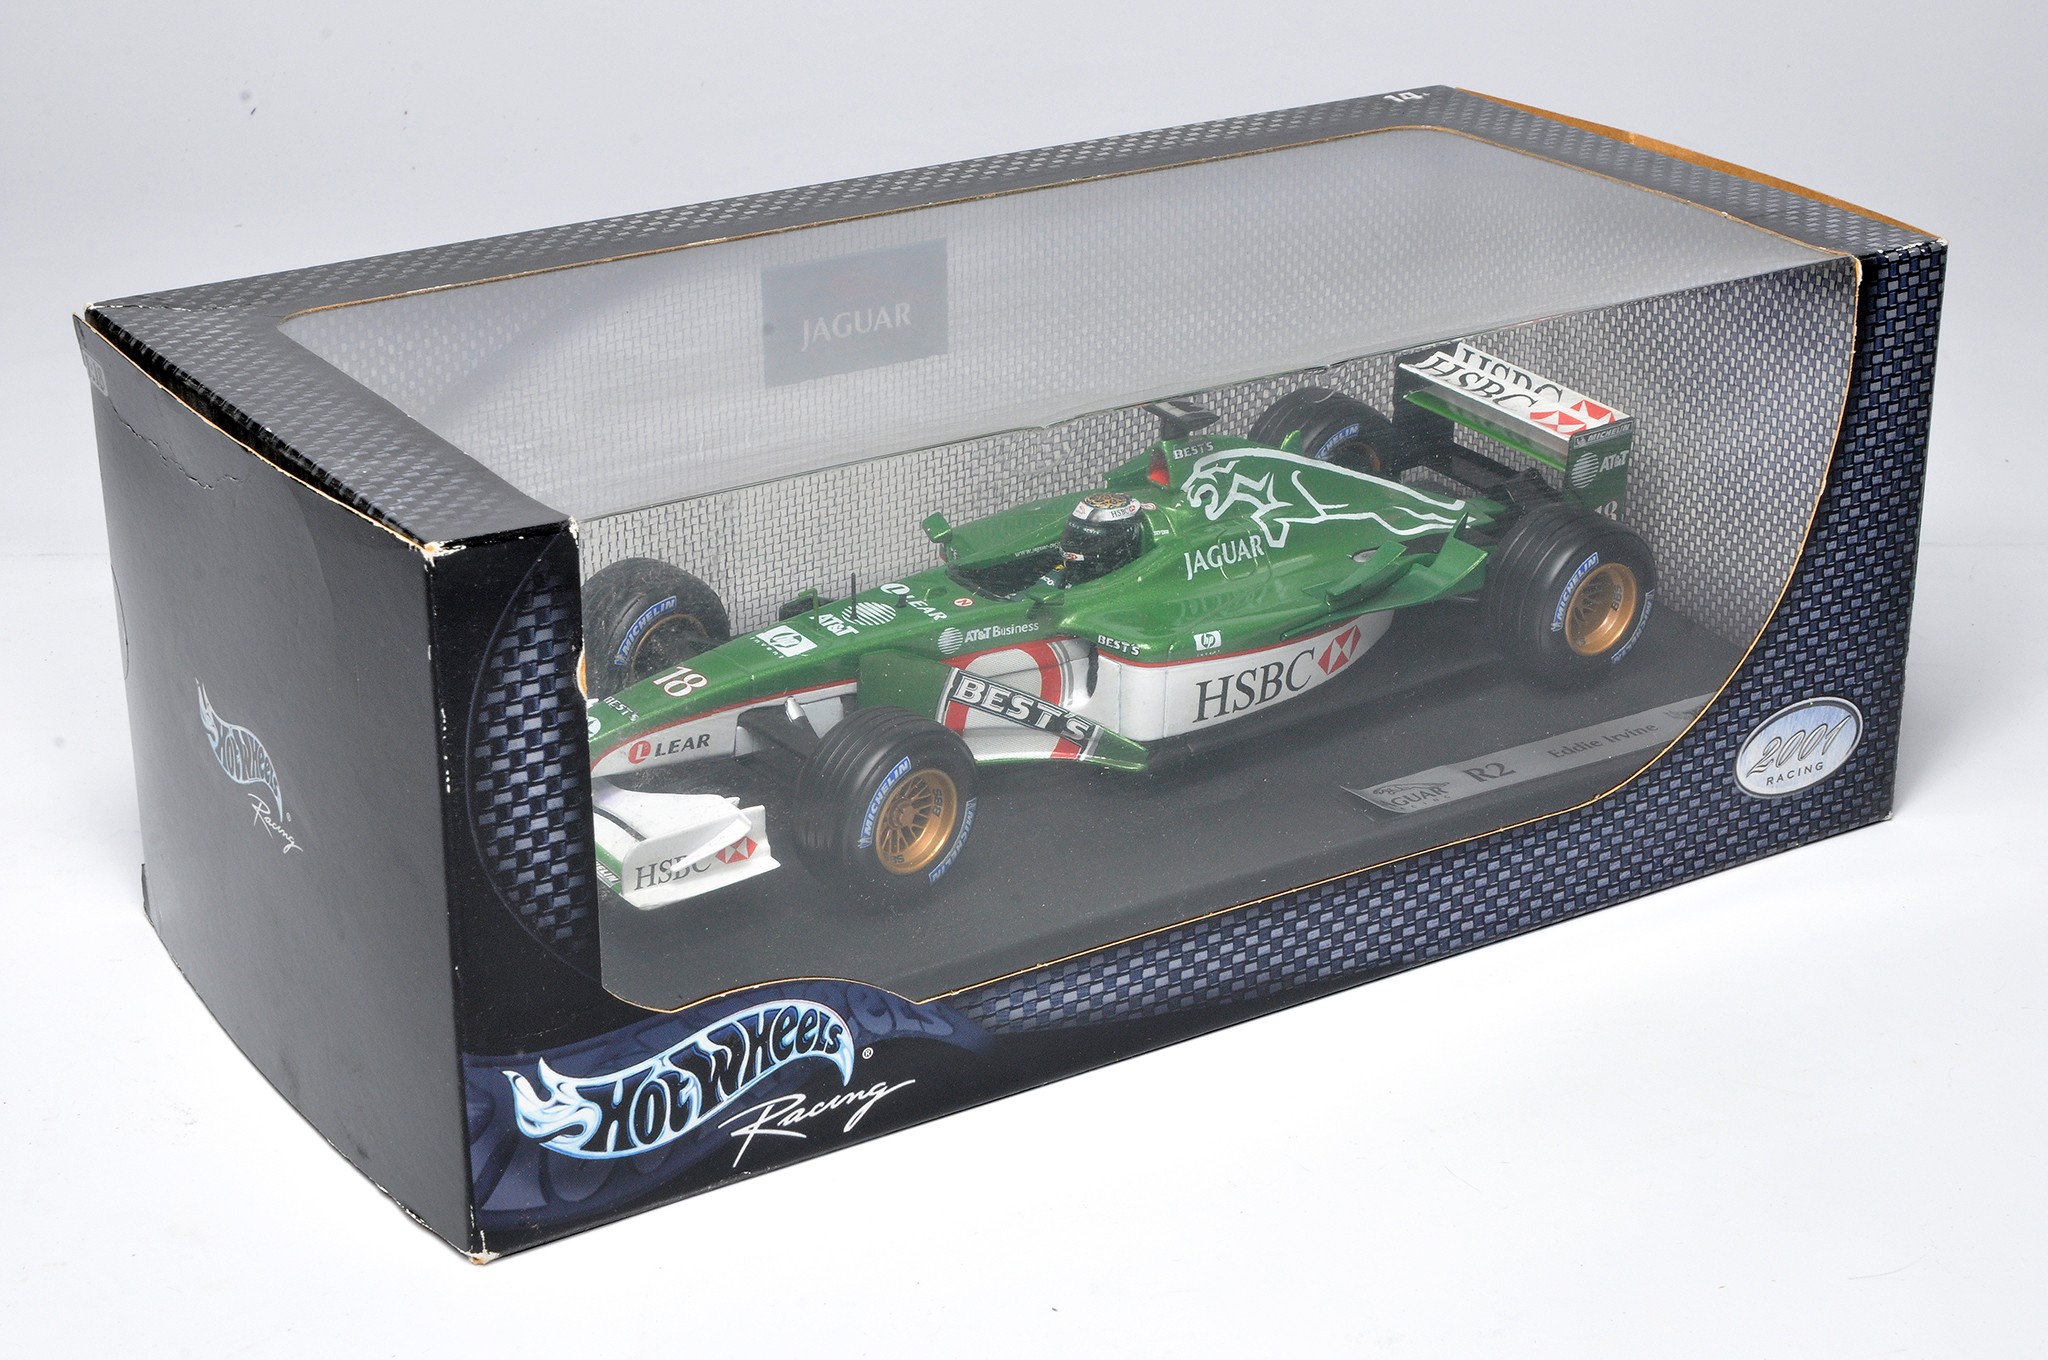 Hot Wheels 1/18 diecast model issue comprising Jaguar Formula One Racing Car, Eddie Irvine. Looks to